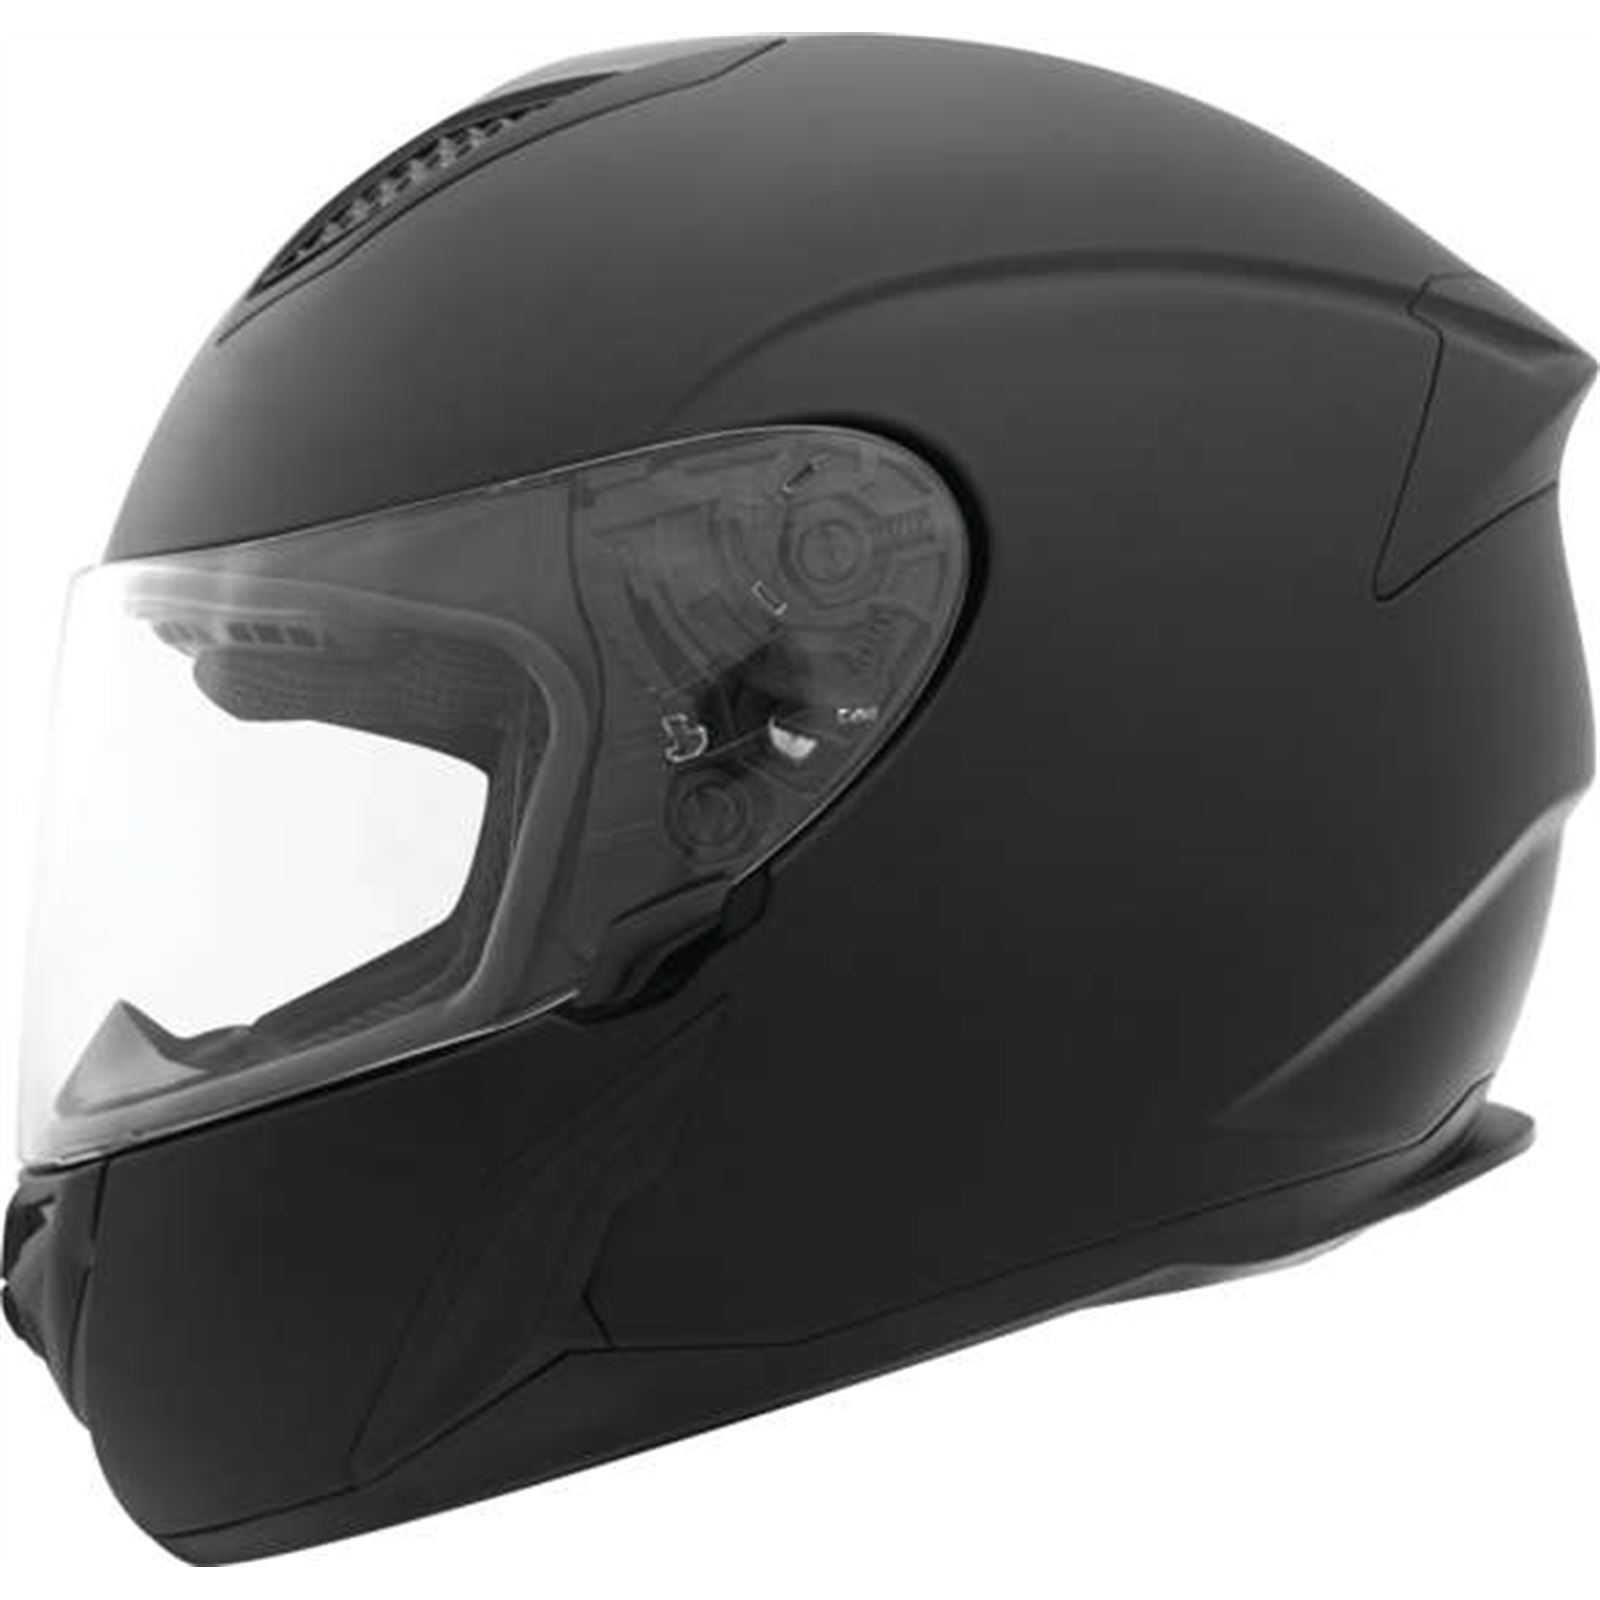 THH Helmets T810S Solid Helmet Flat Black - Medium